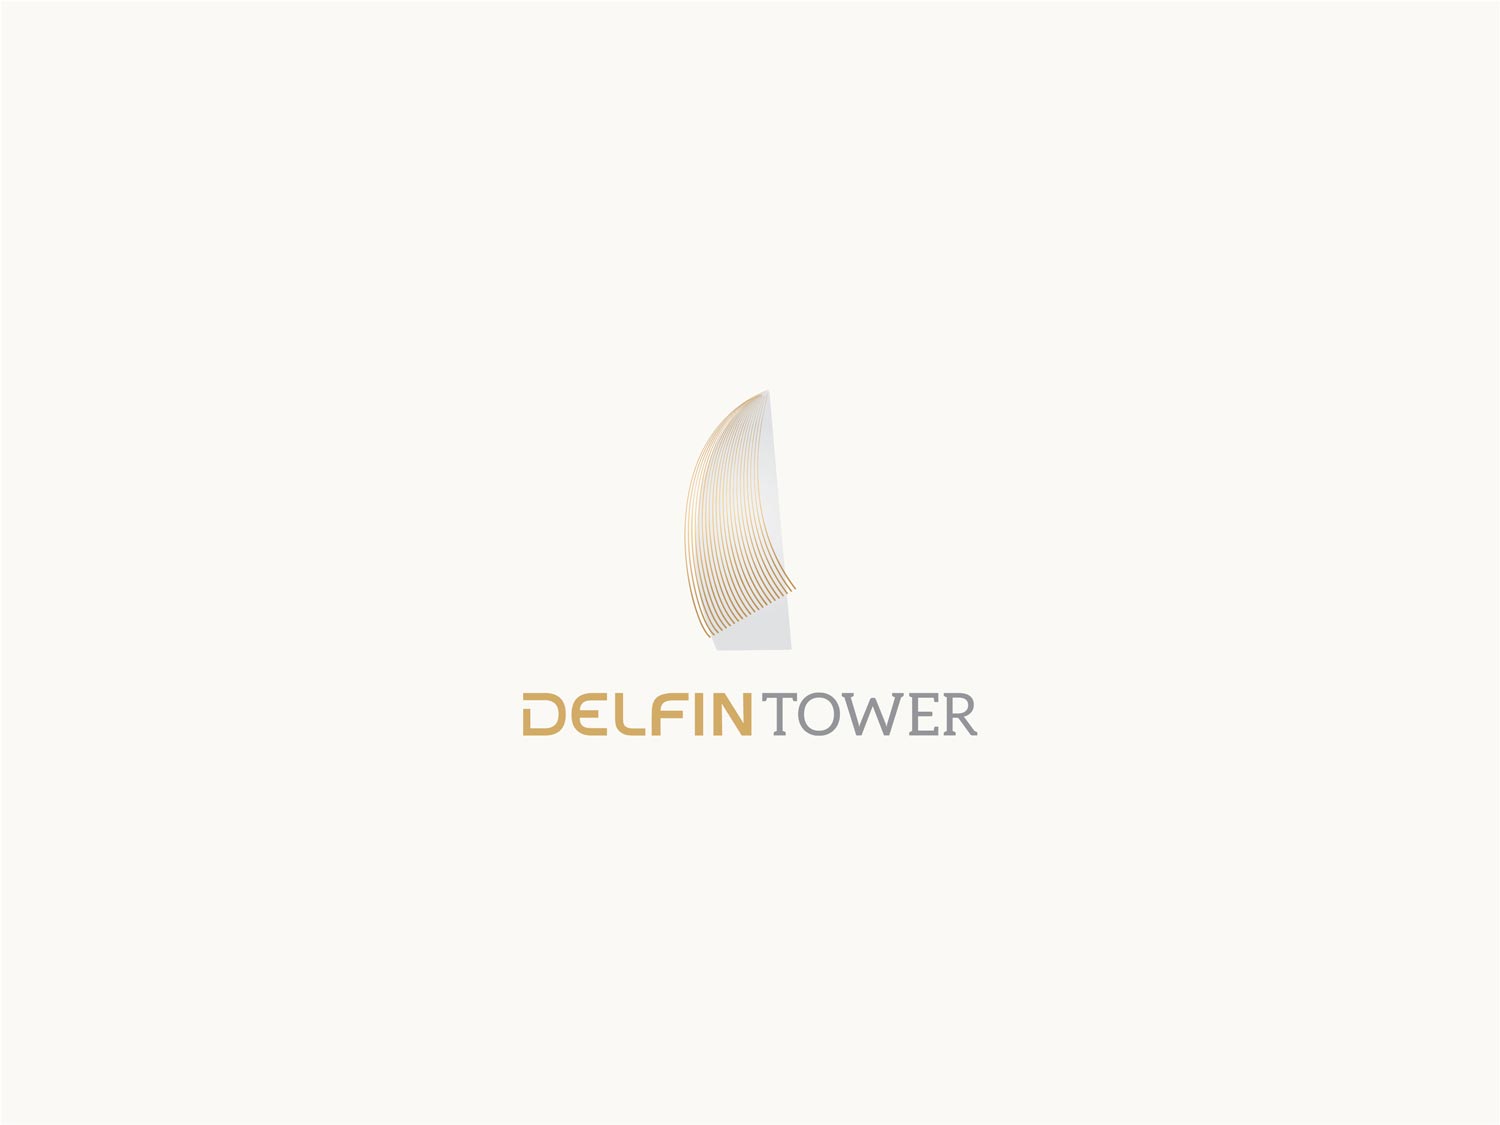 giset design delfin tower logo